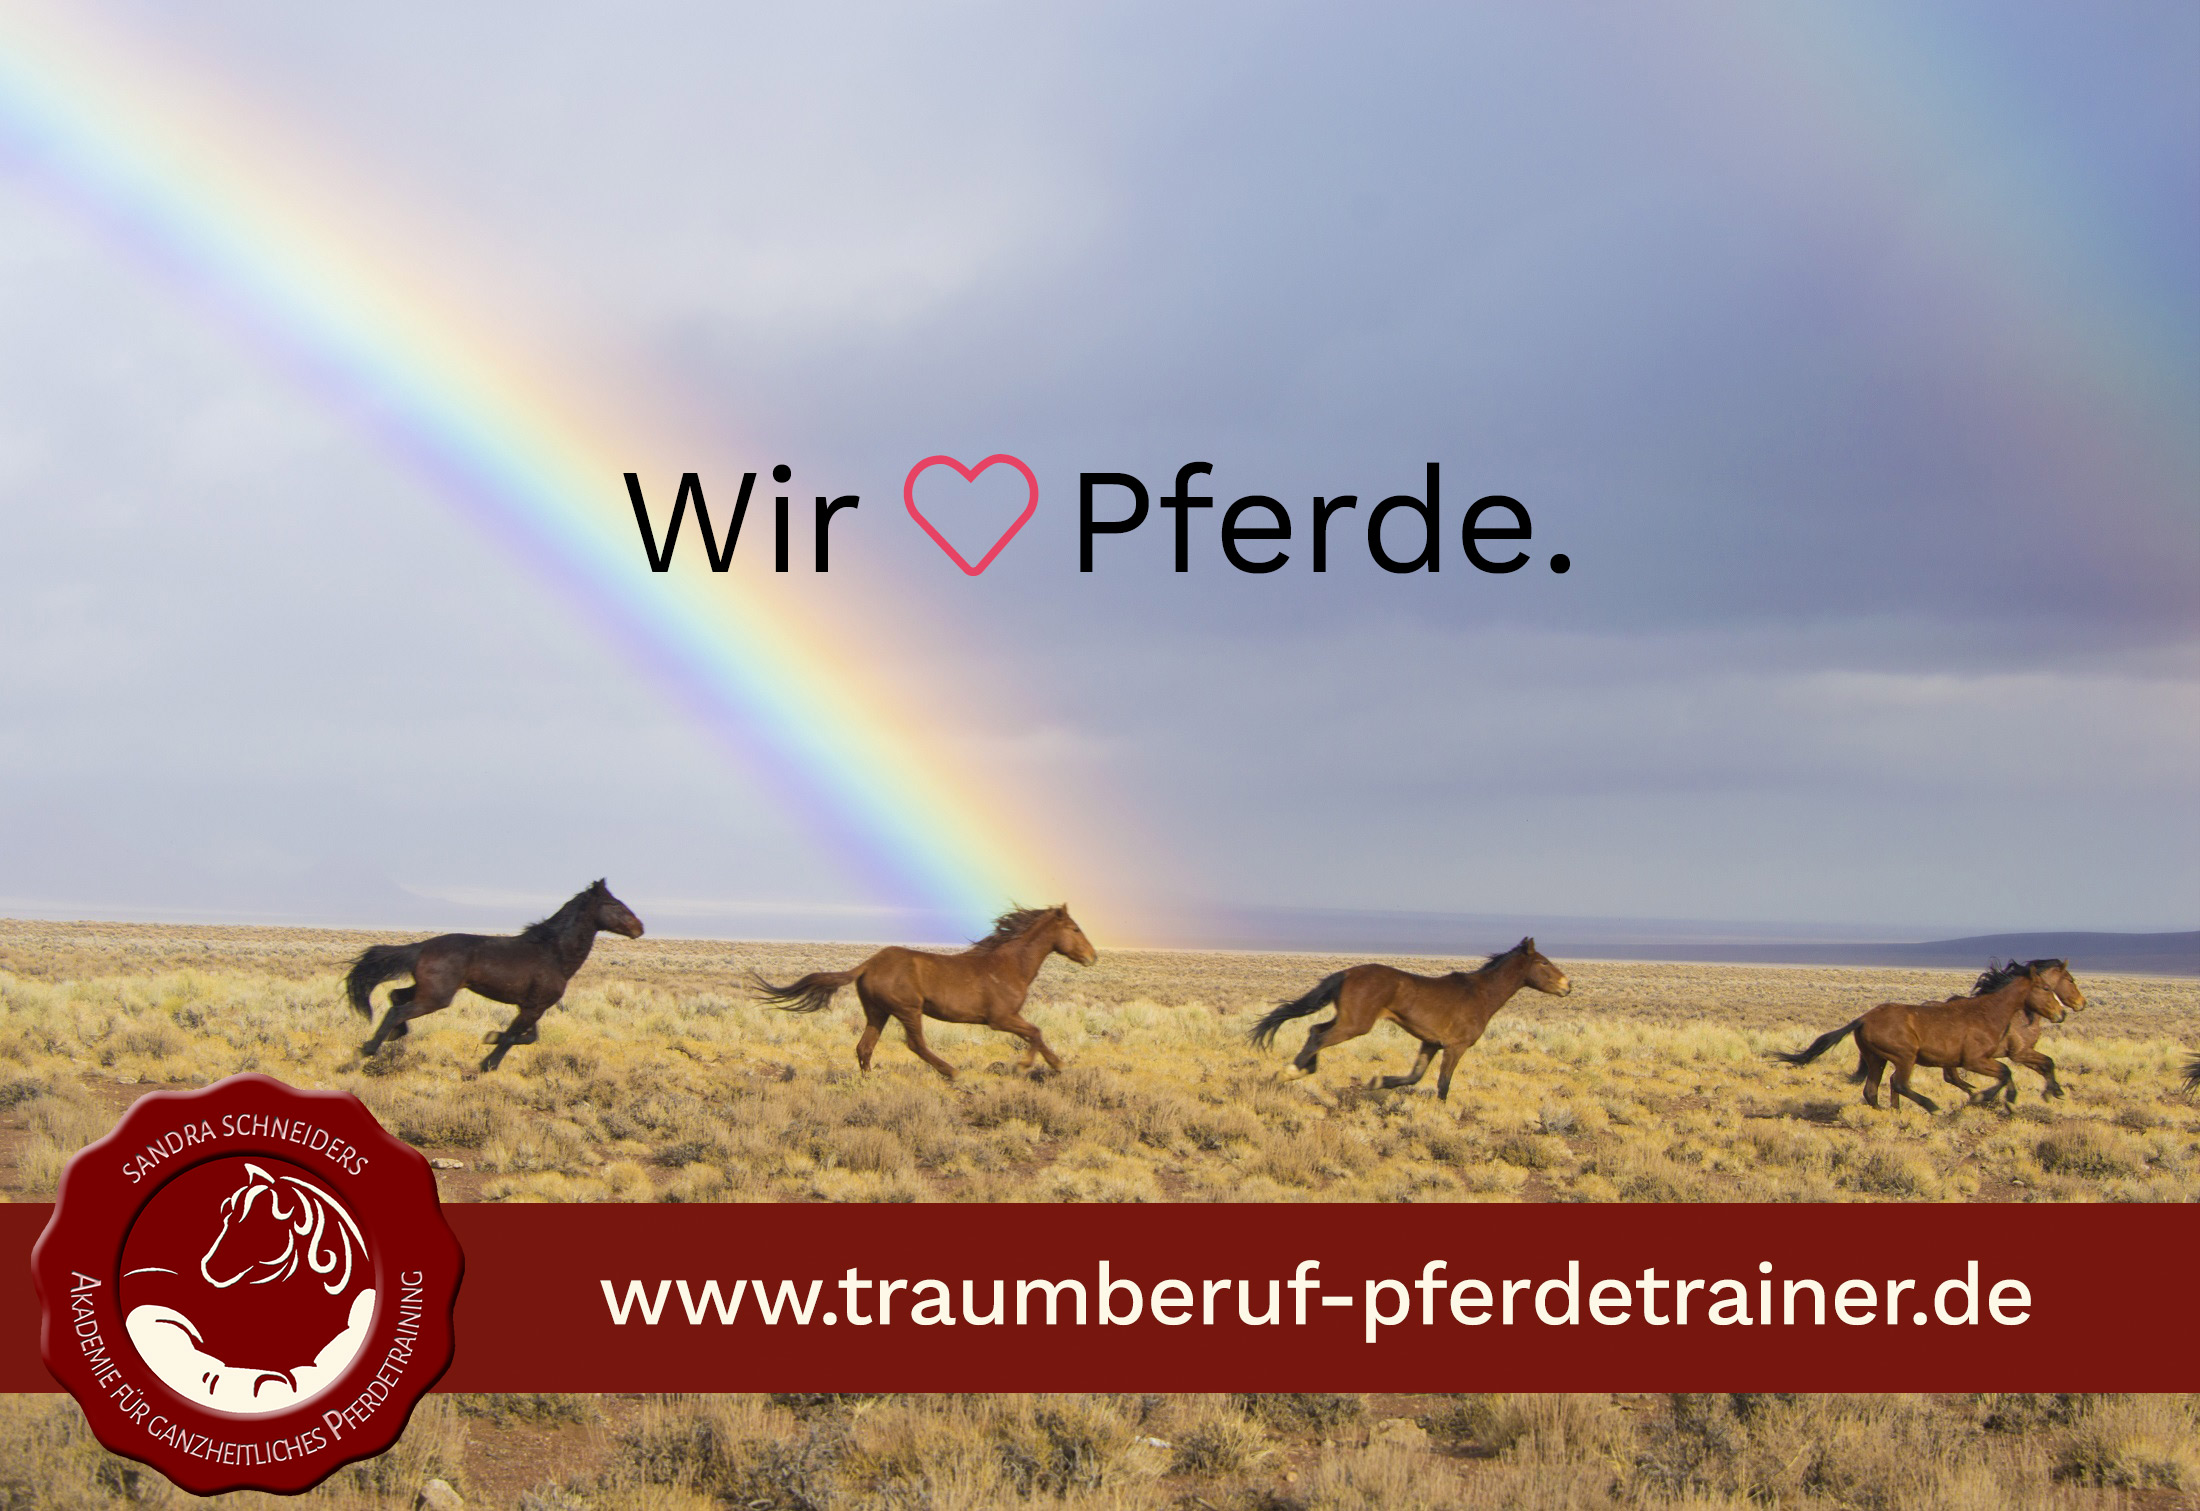 (c) Traumberuf-pferdetrainer.de